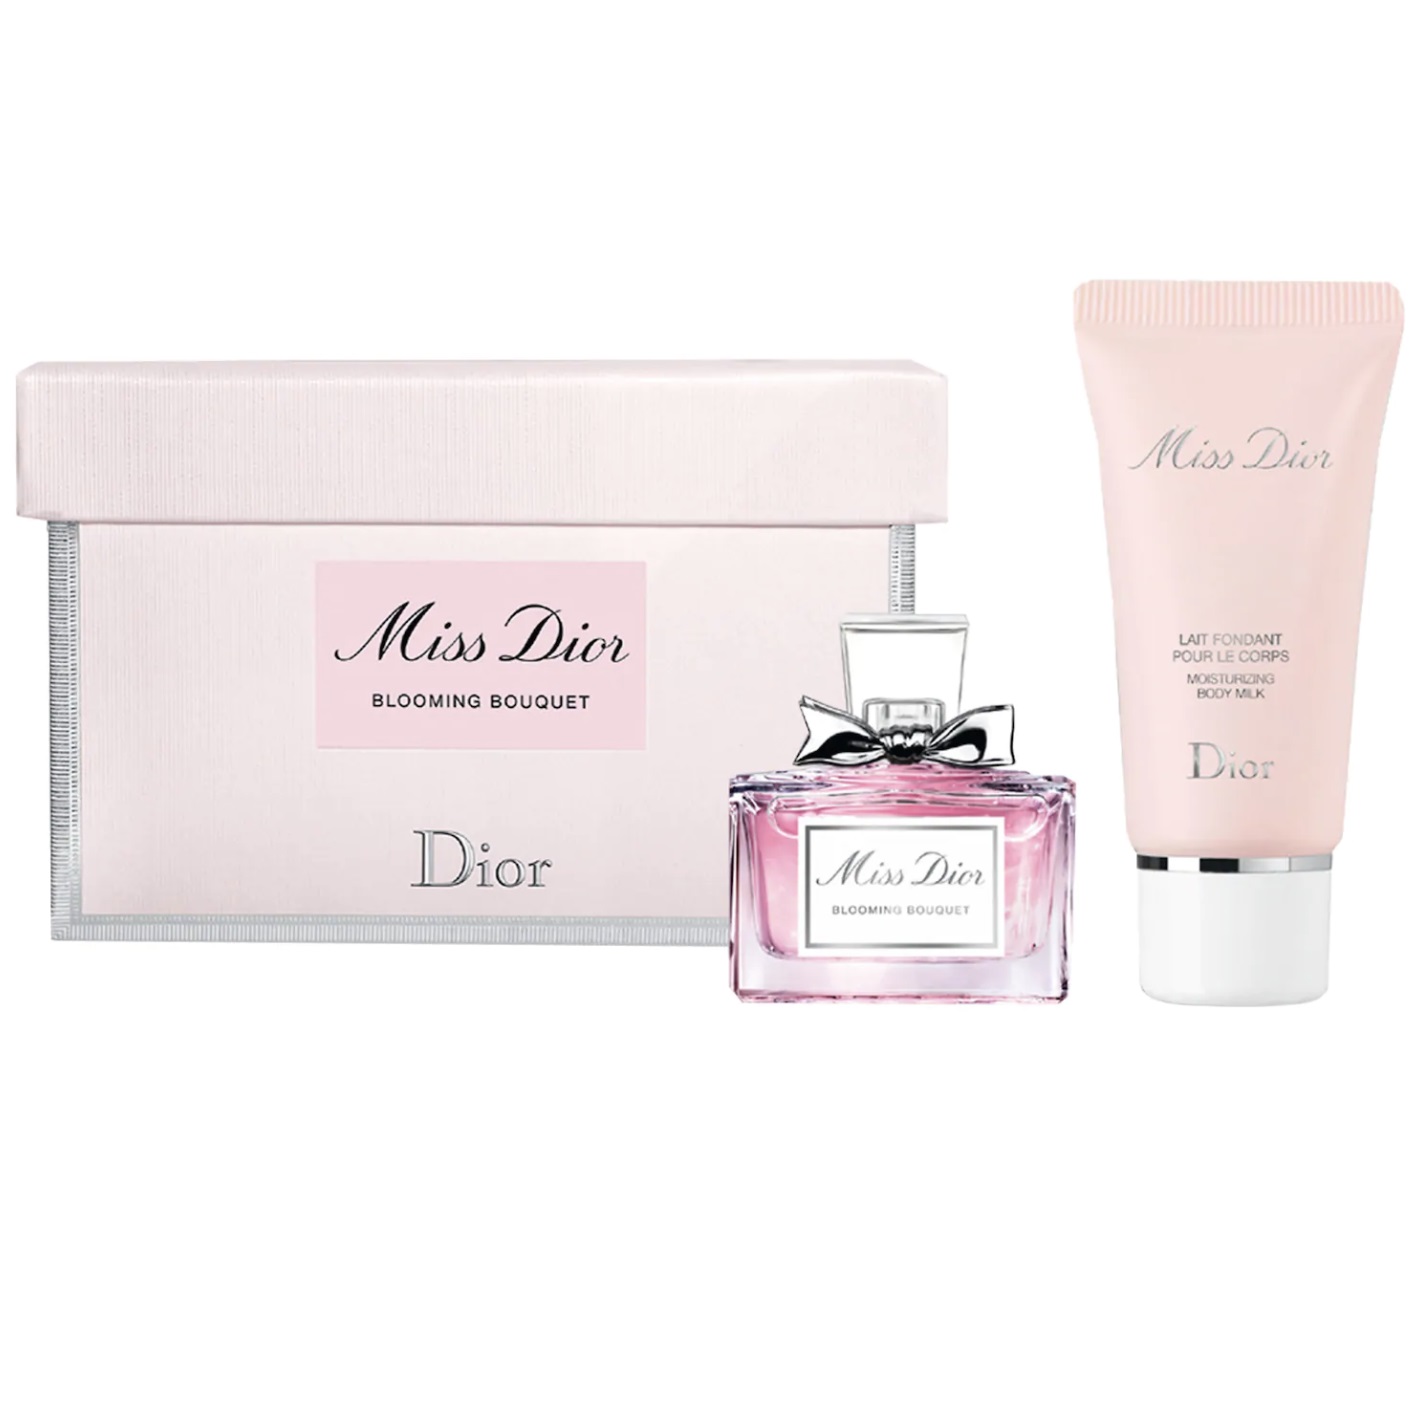 Dior Perfume MISS DIOR BLOOMING BOUQUET Mini EDT Miniature 5ml Travel Women   eBay